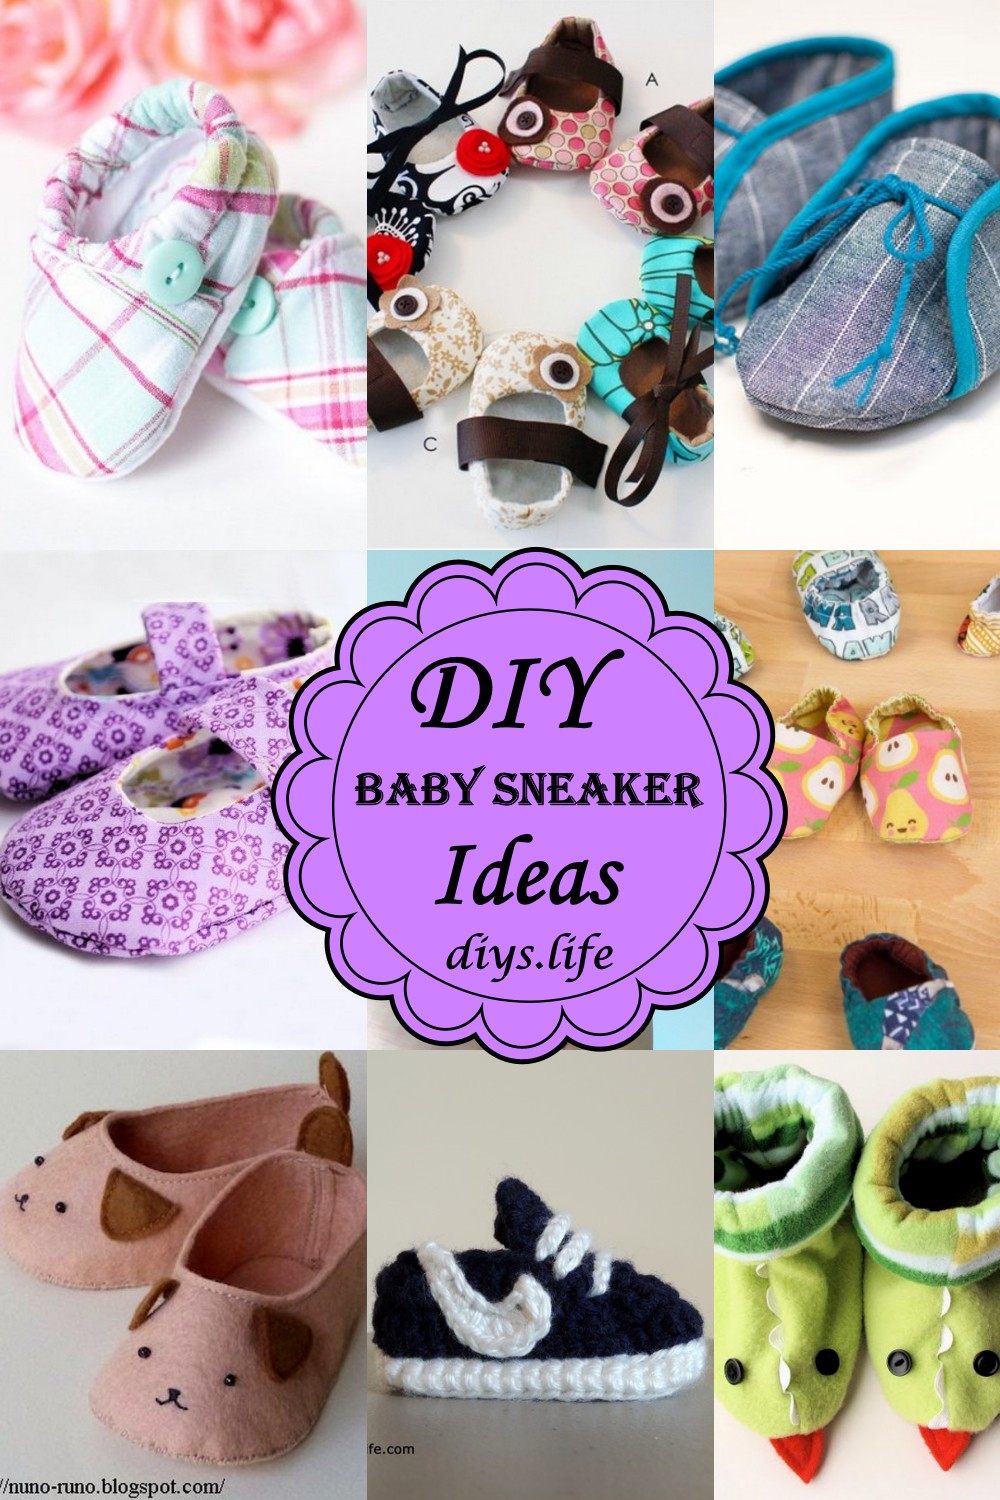 DIY Baby Sneaker Ideas